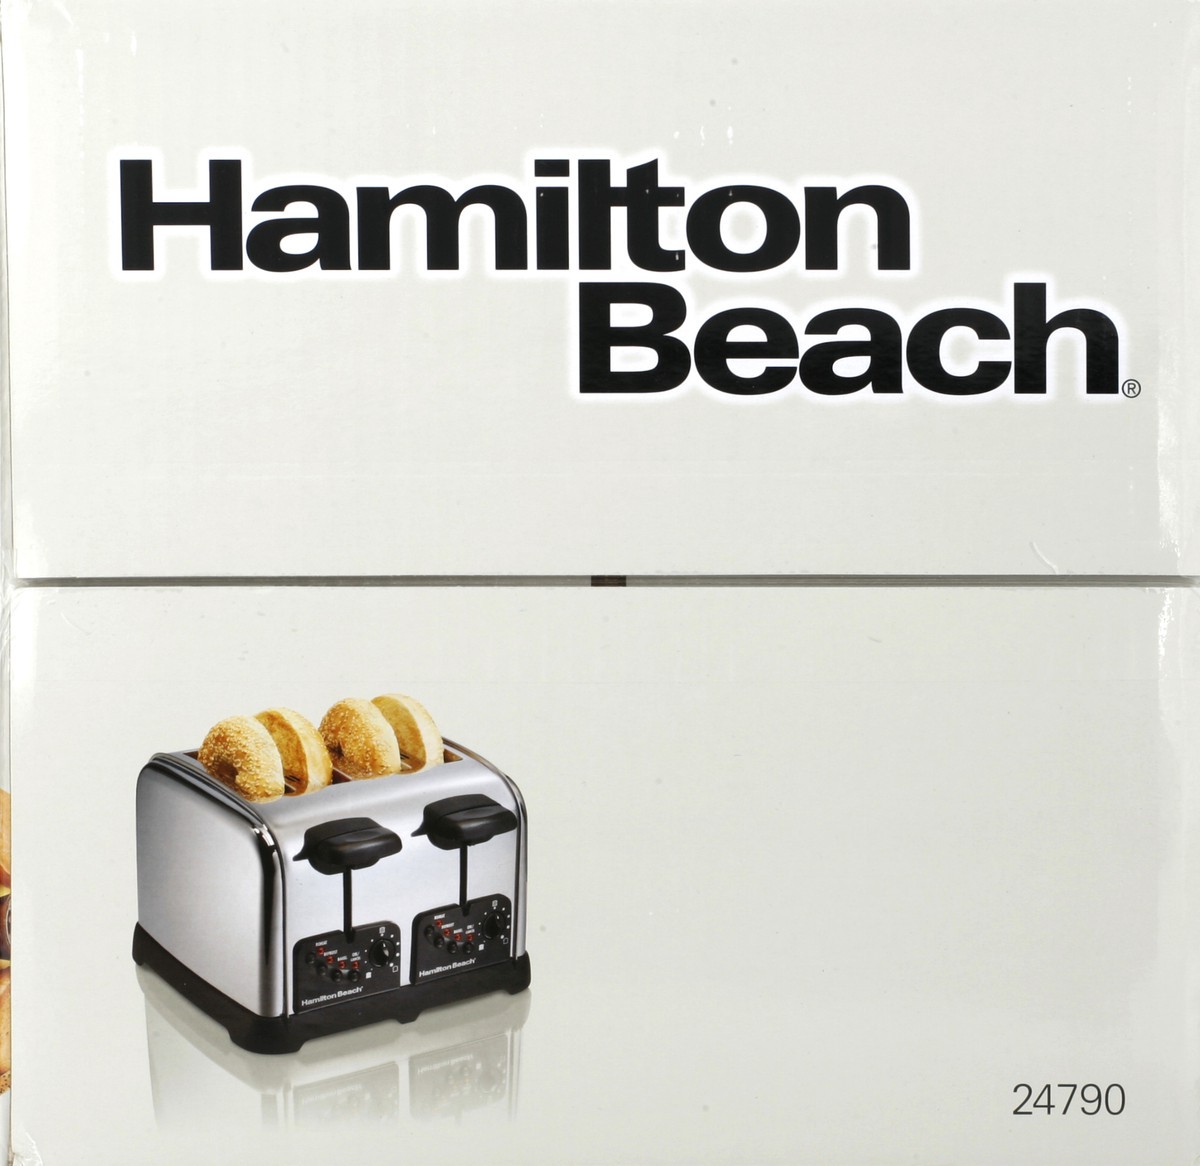 slide 2 of 5, Hamilton Beach Toaster 1 ea, 7.63 in x 11.3 in x 11.06 in